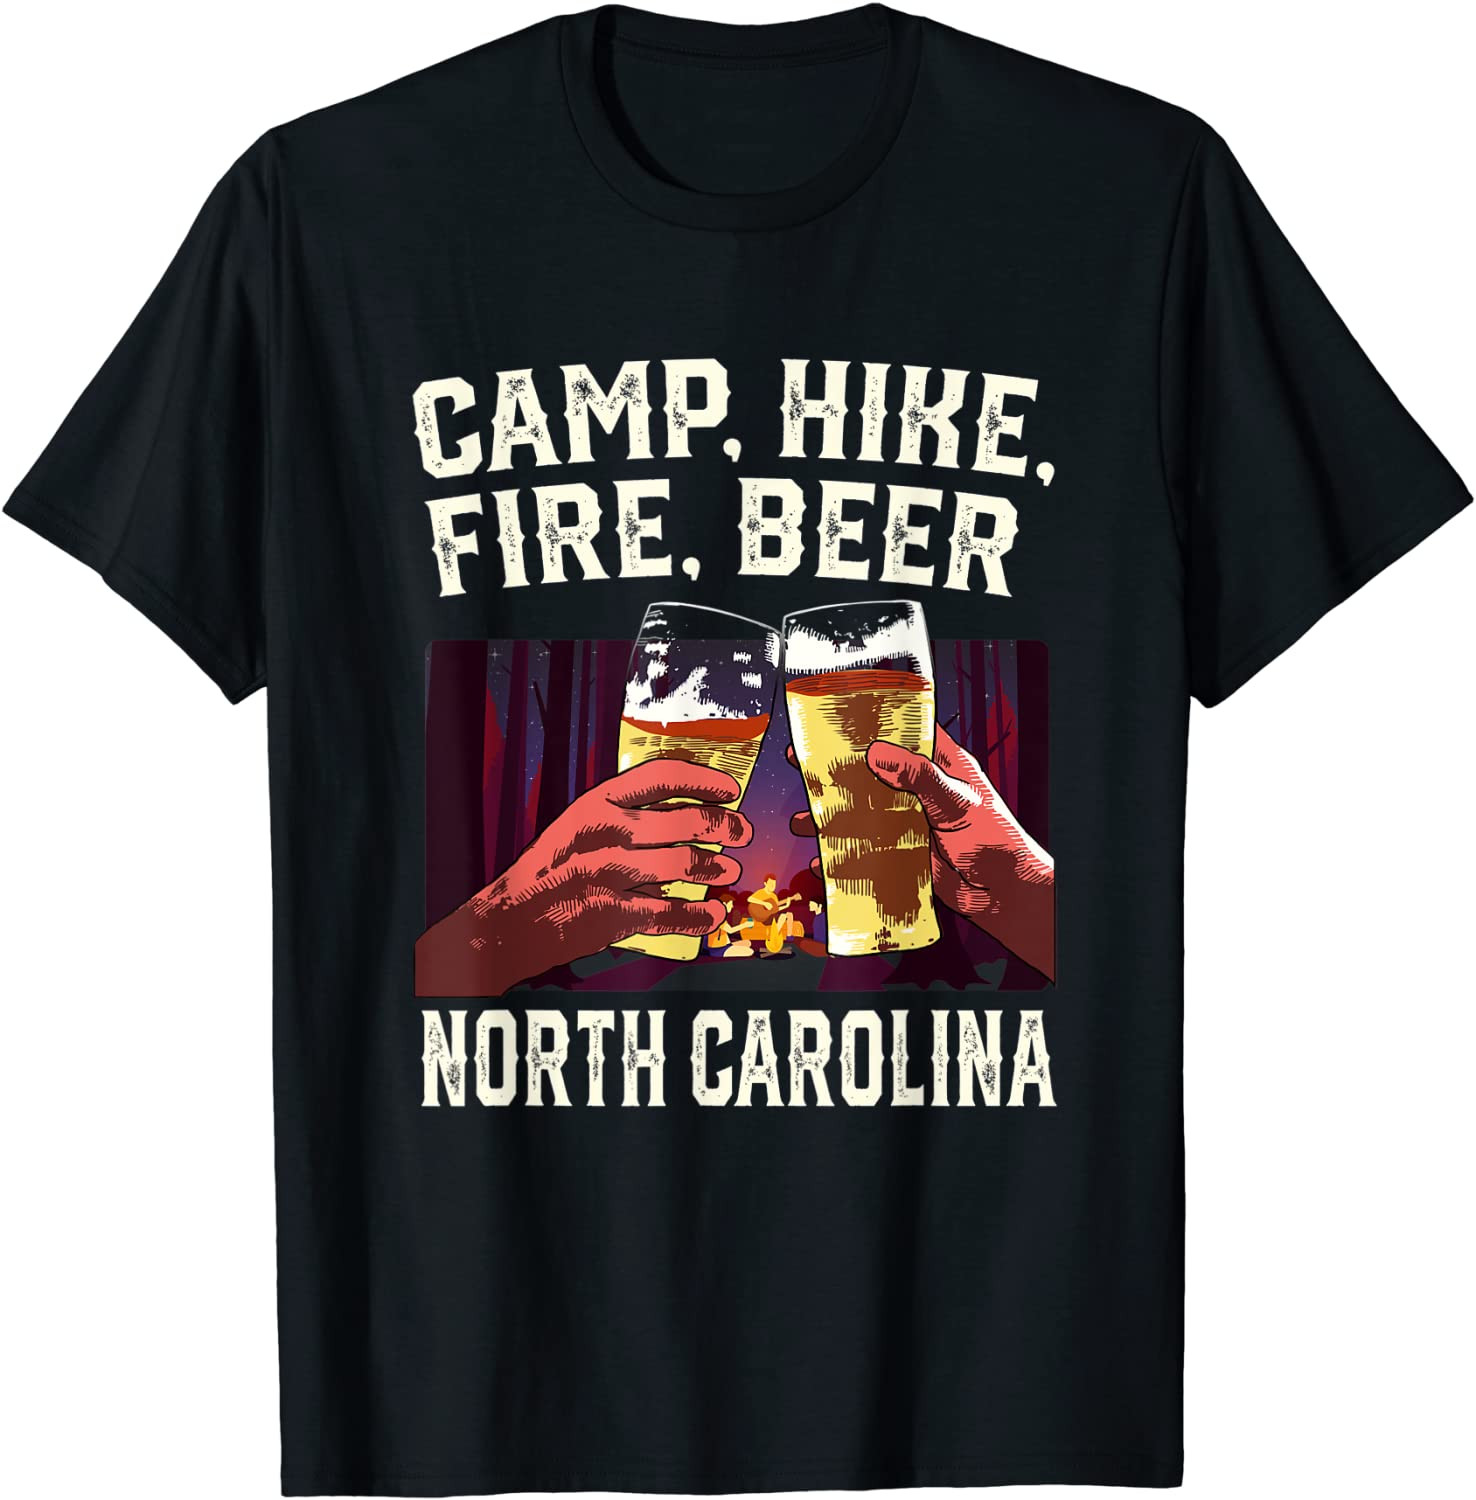 Camp, Hike, Fire, Beer North Carolina Camping NC Camper T-Shirt